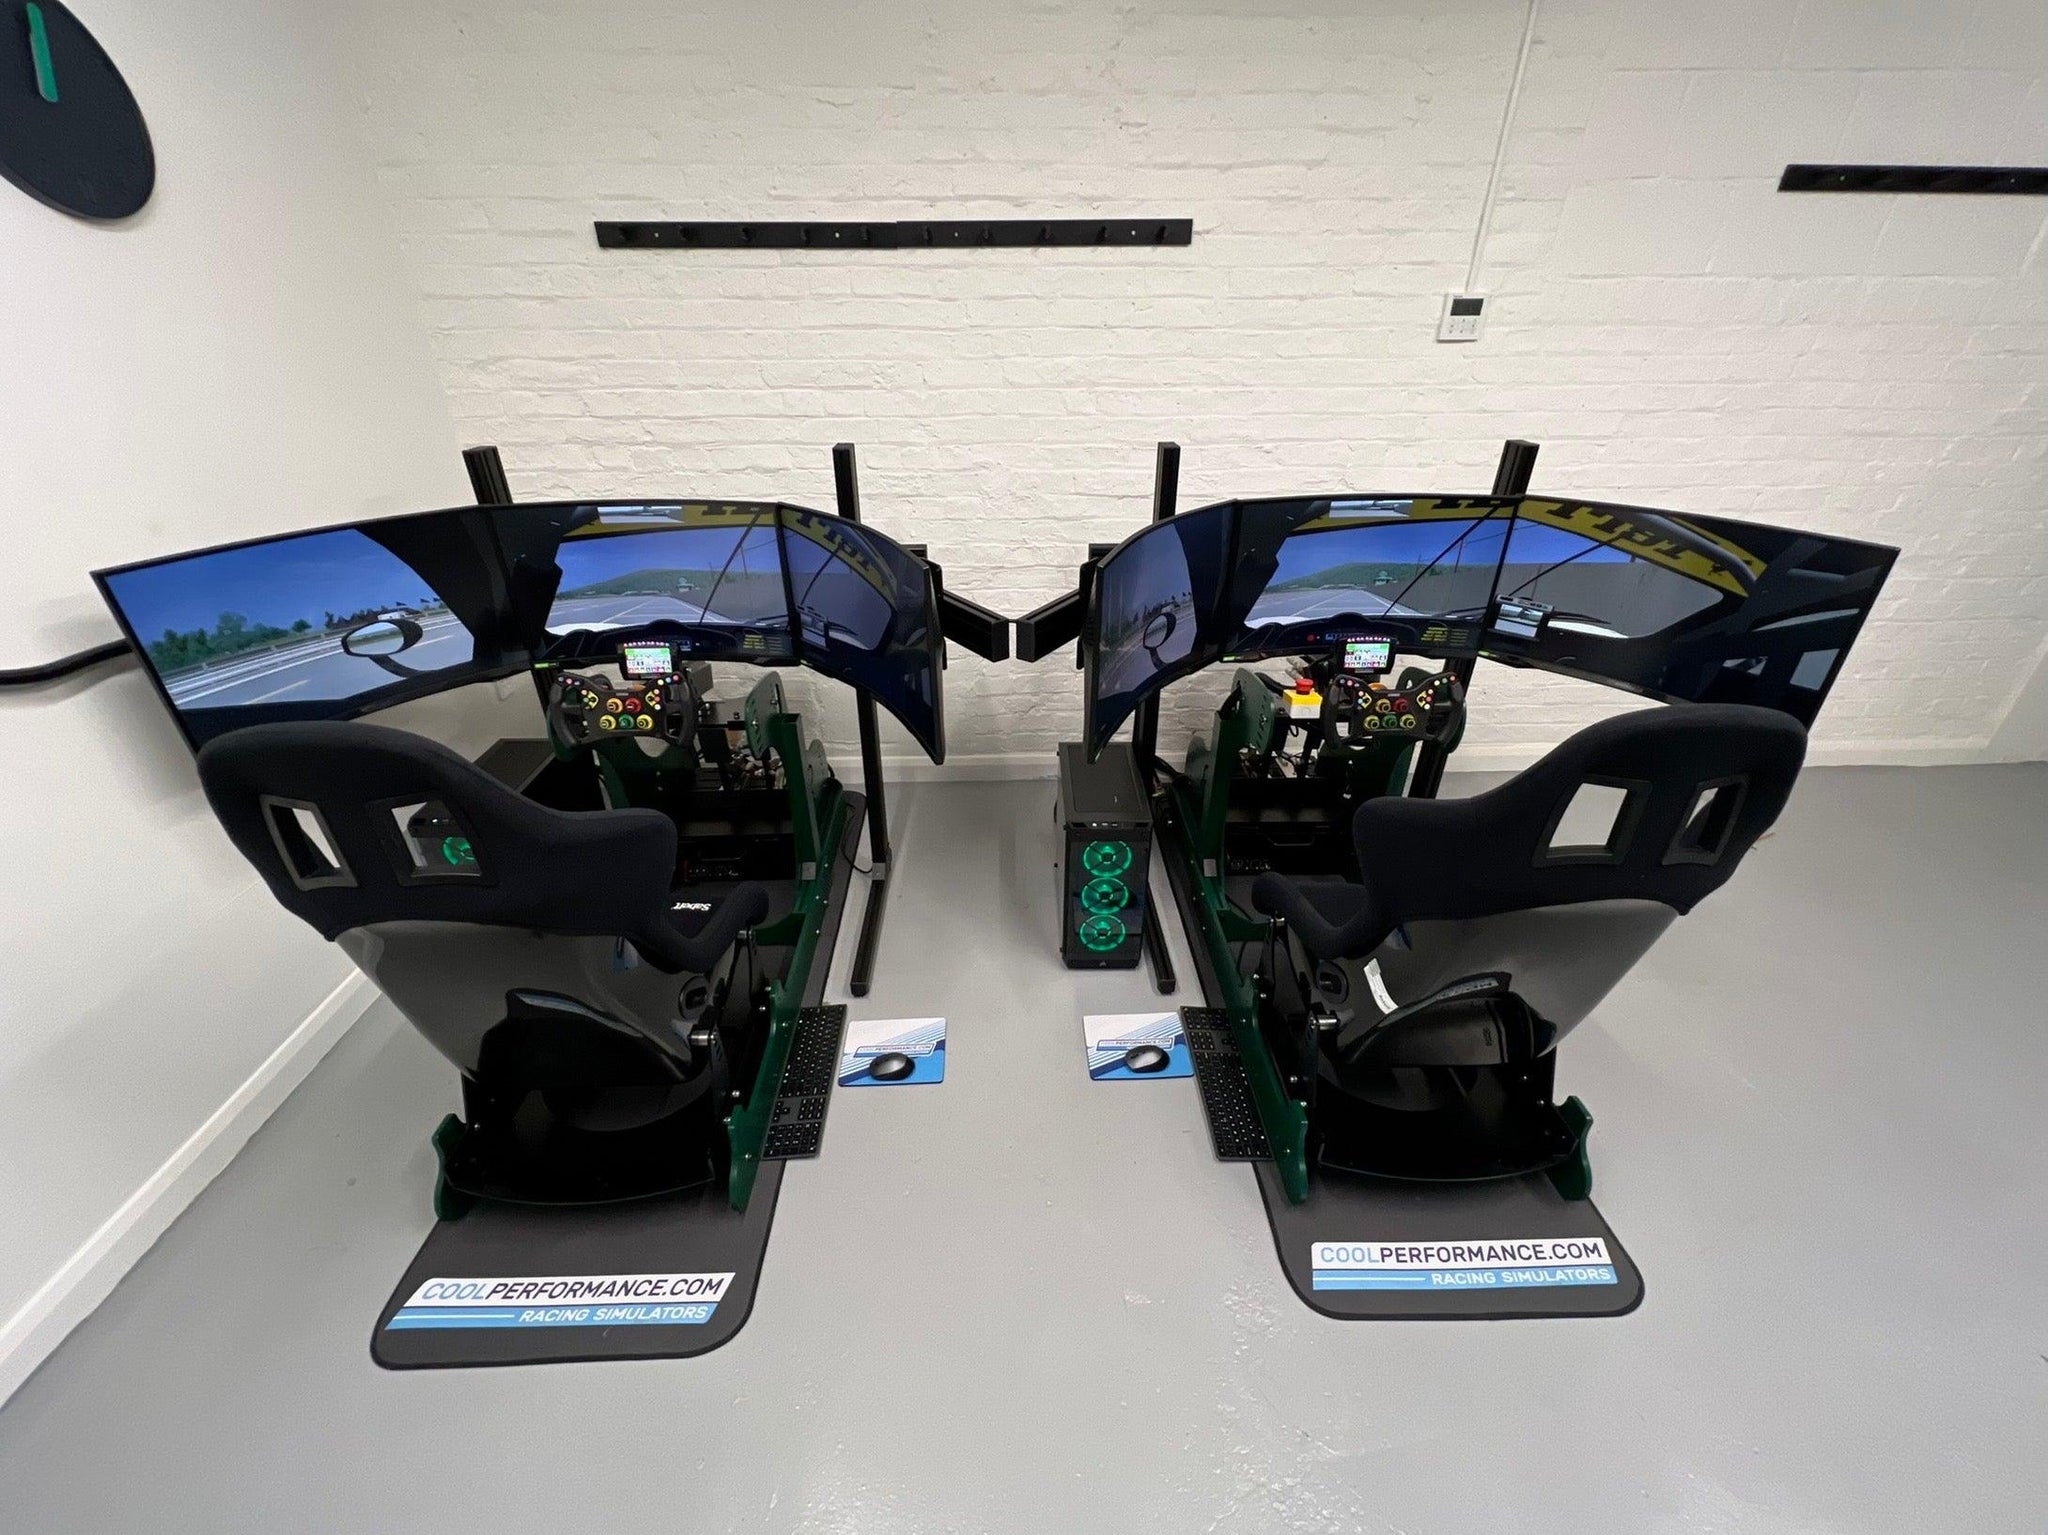 Cool Performance Accessories  Cool Performance Racing Simulators